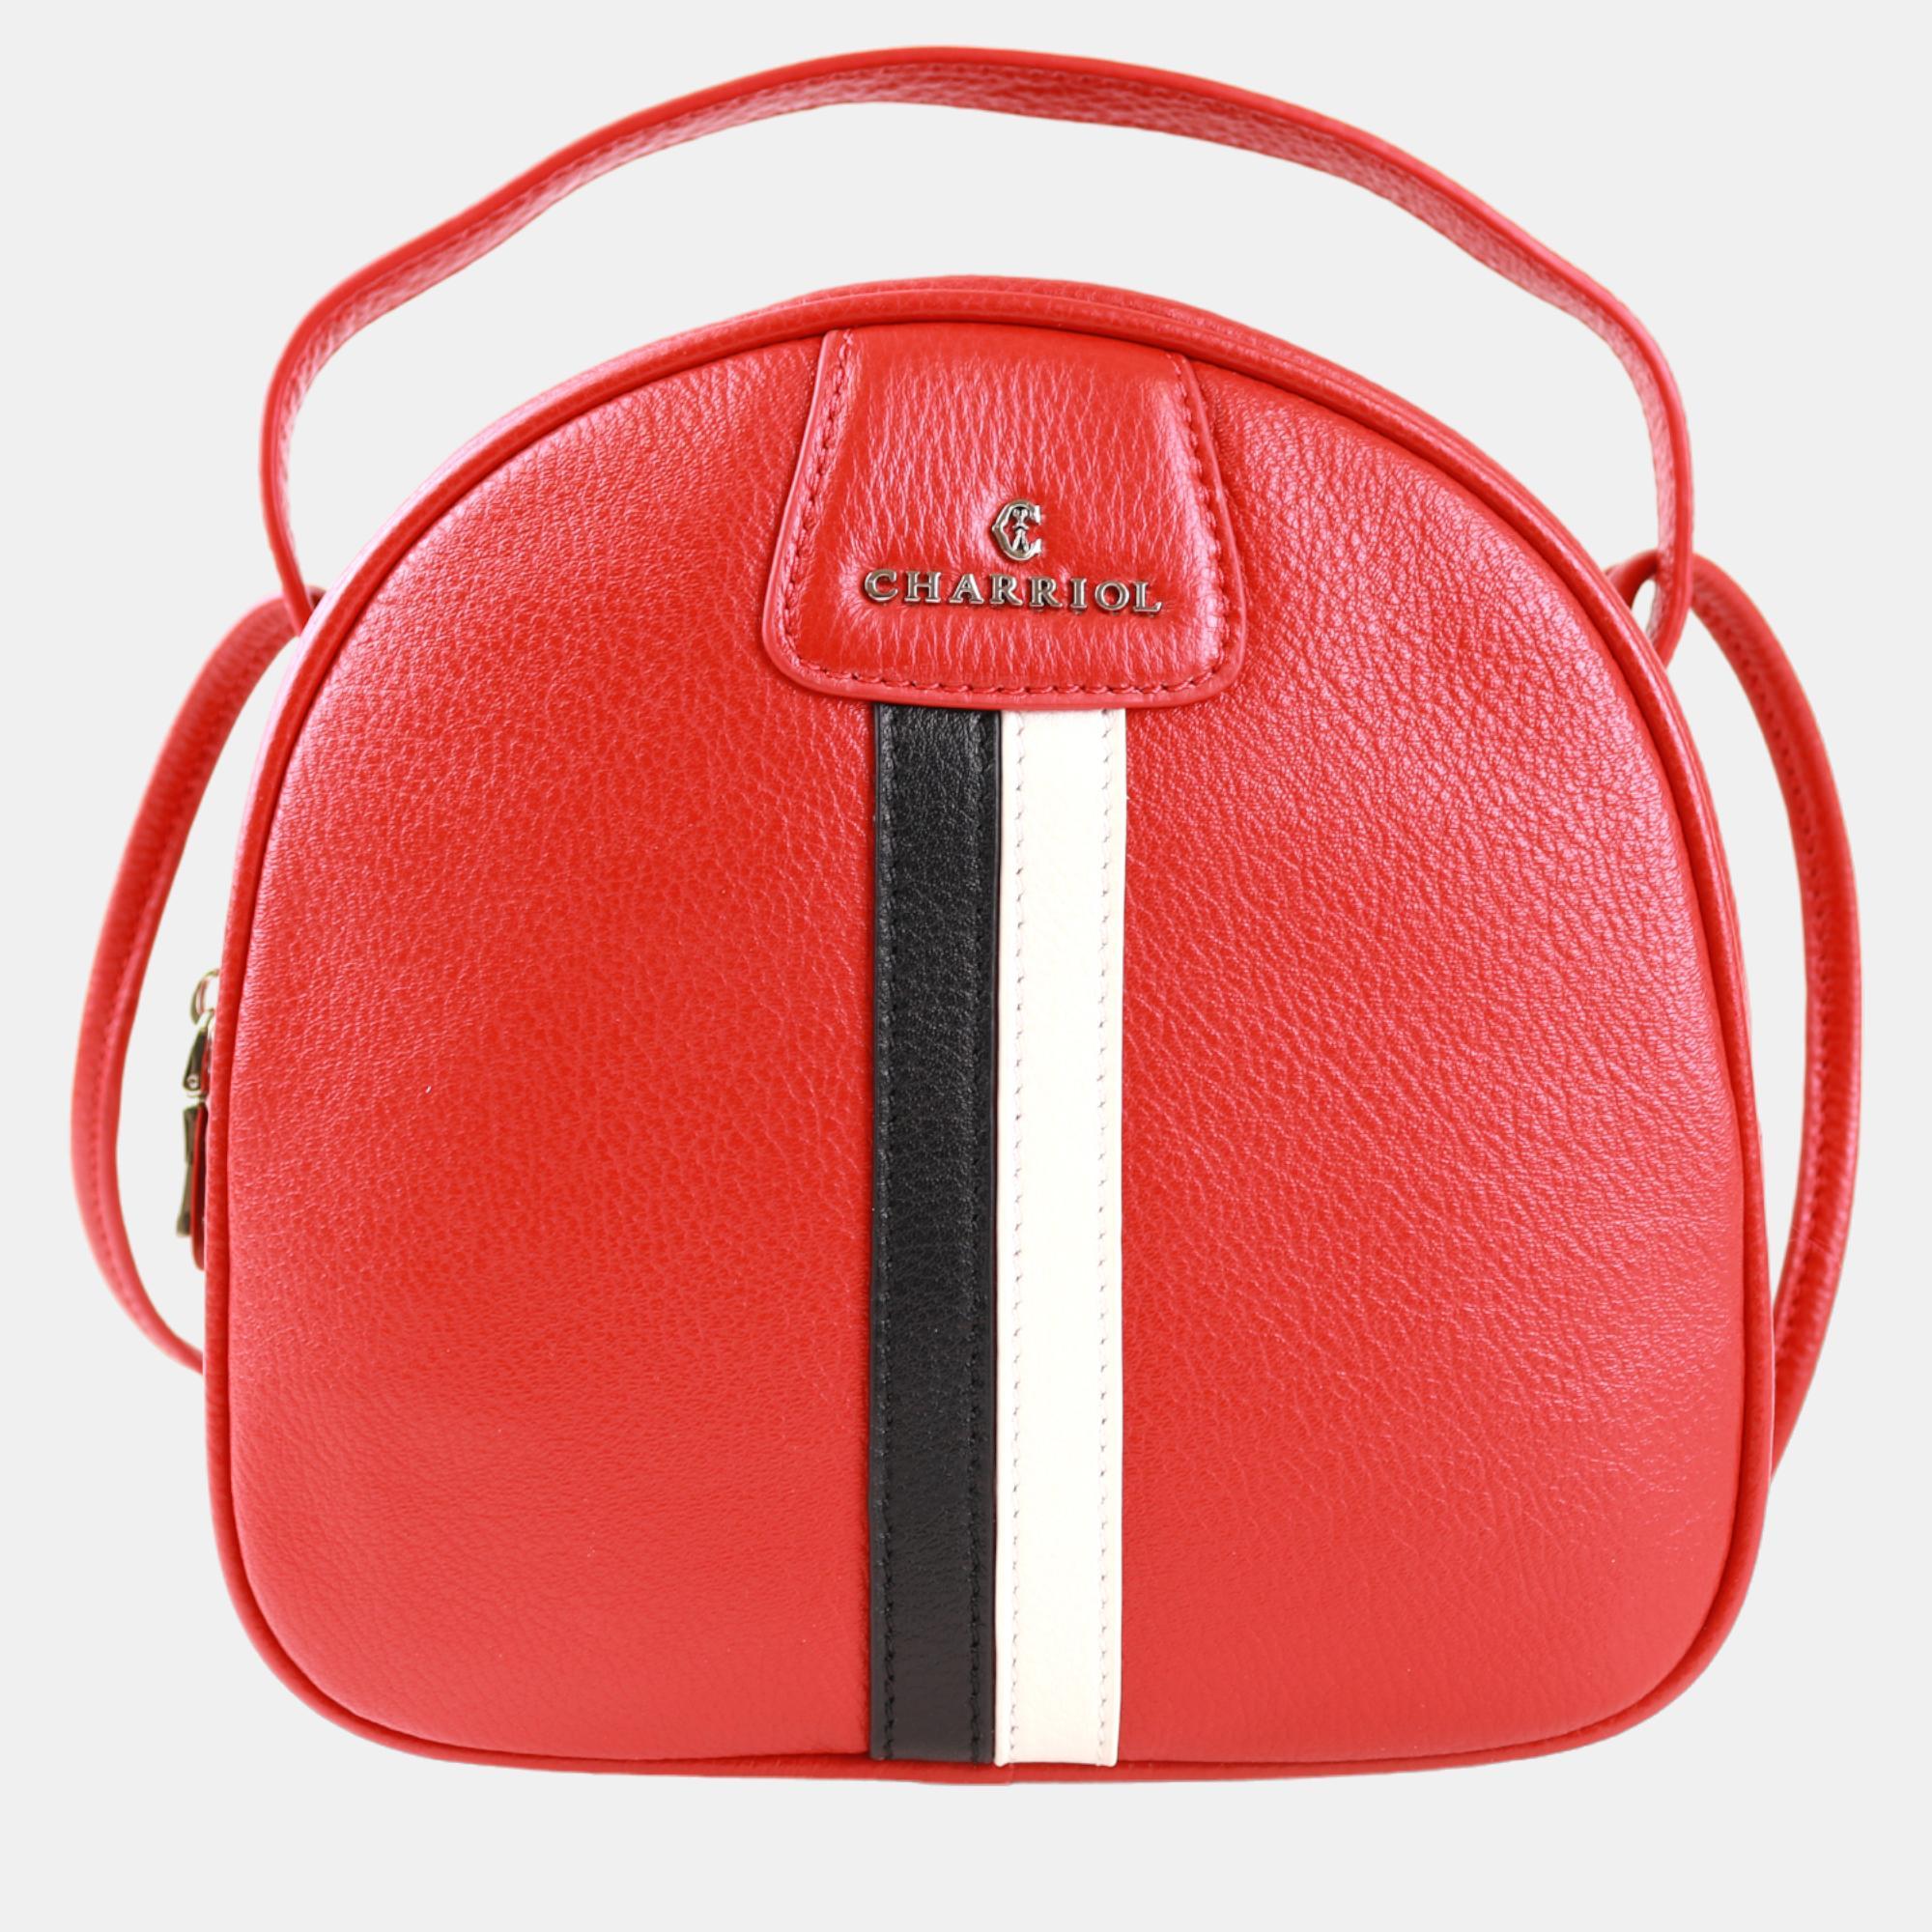 Charriol Red Leather Conic Handbag